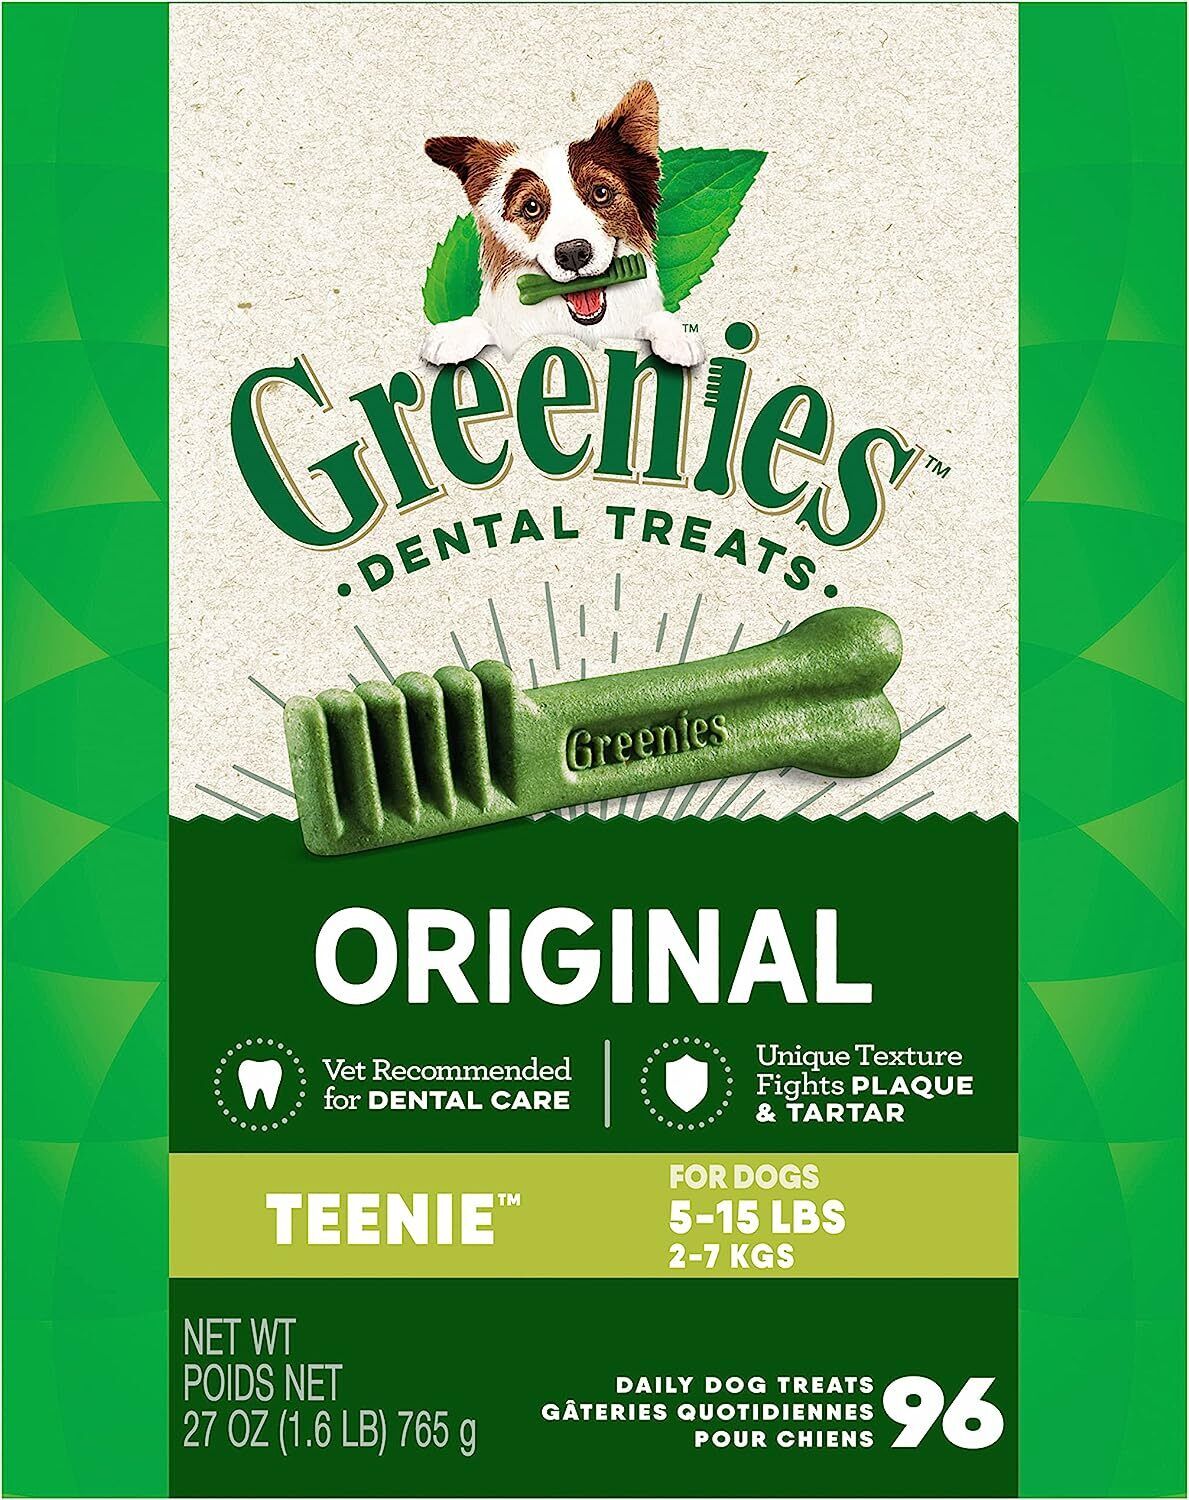 Greenies Original Dental Chew Teenie Size 96 Count - 9 Pack